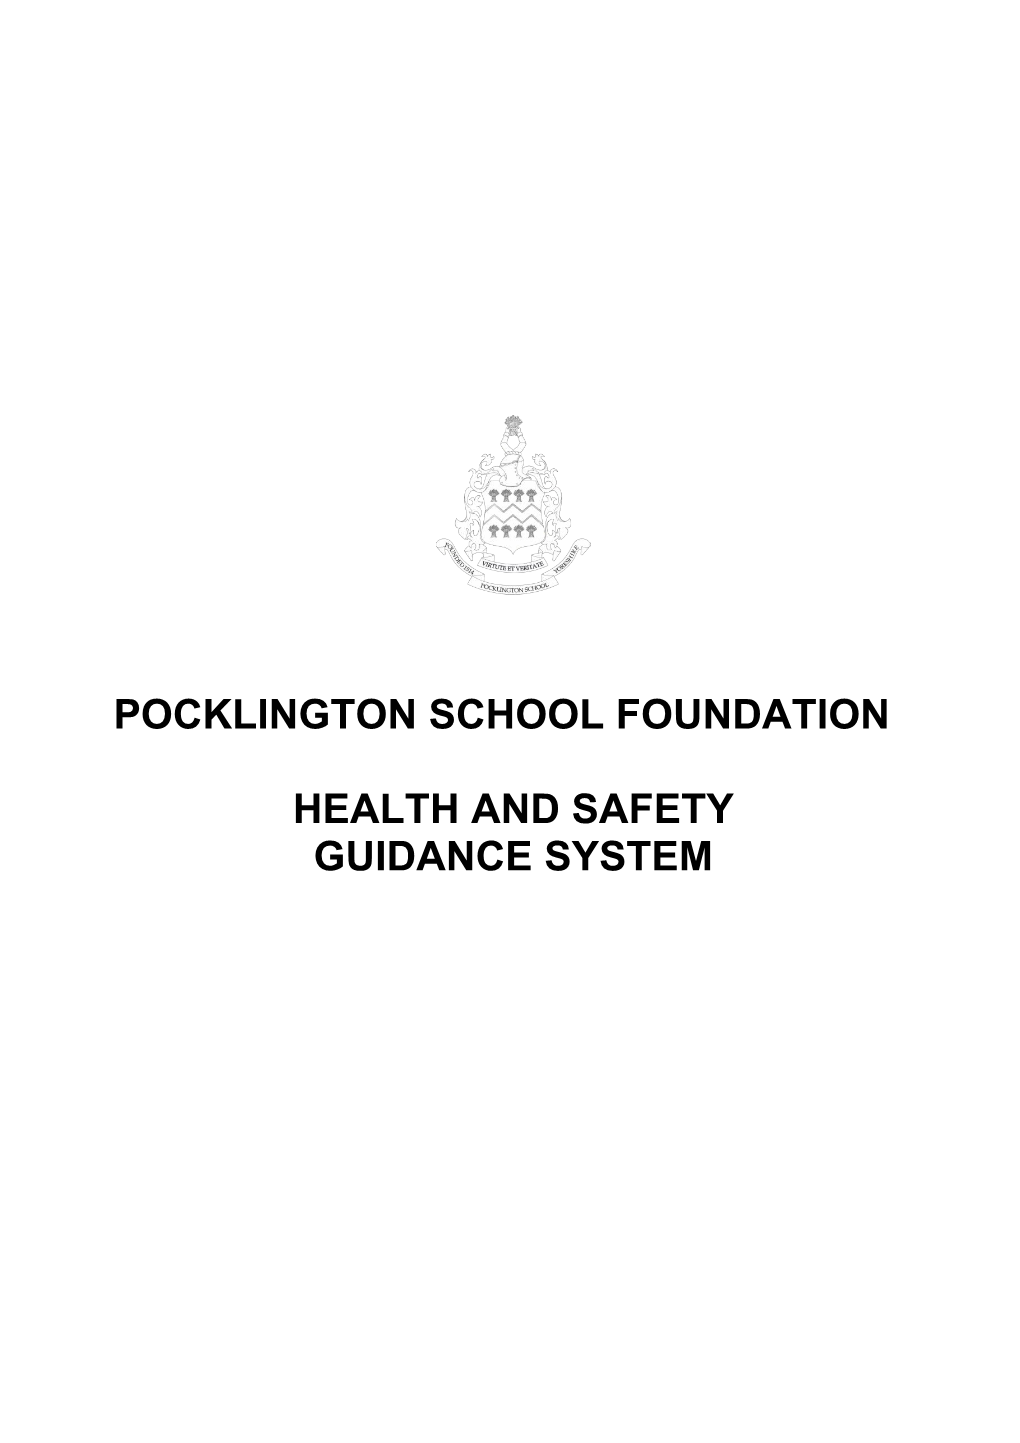 Pocklington School Foundation